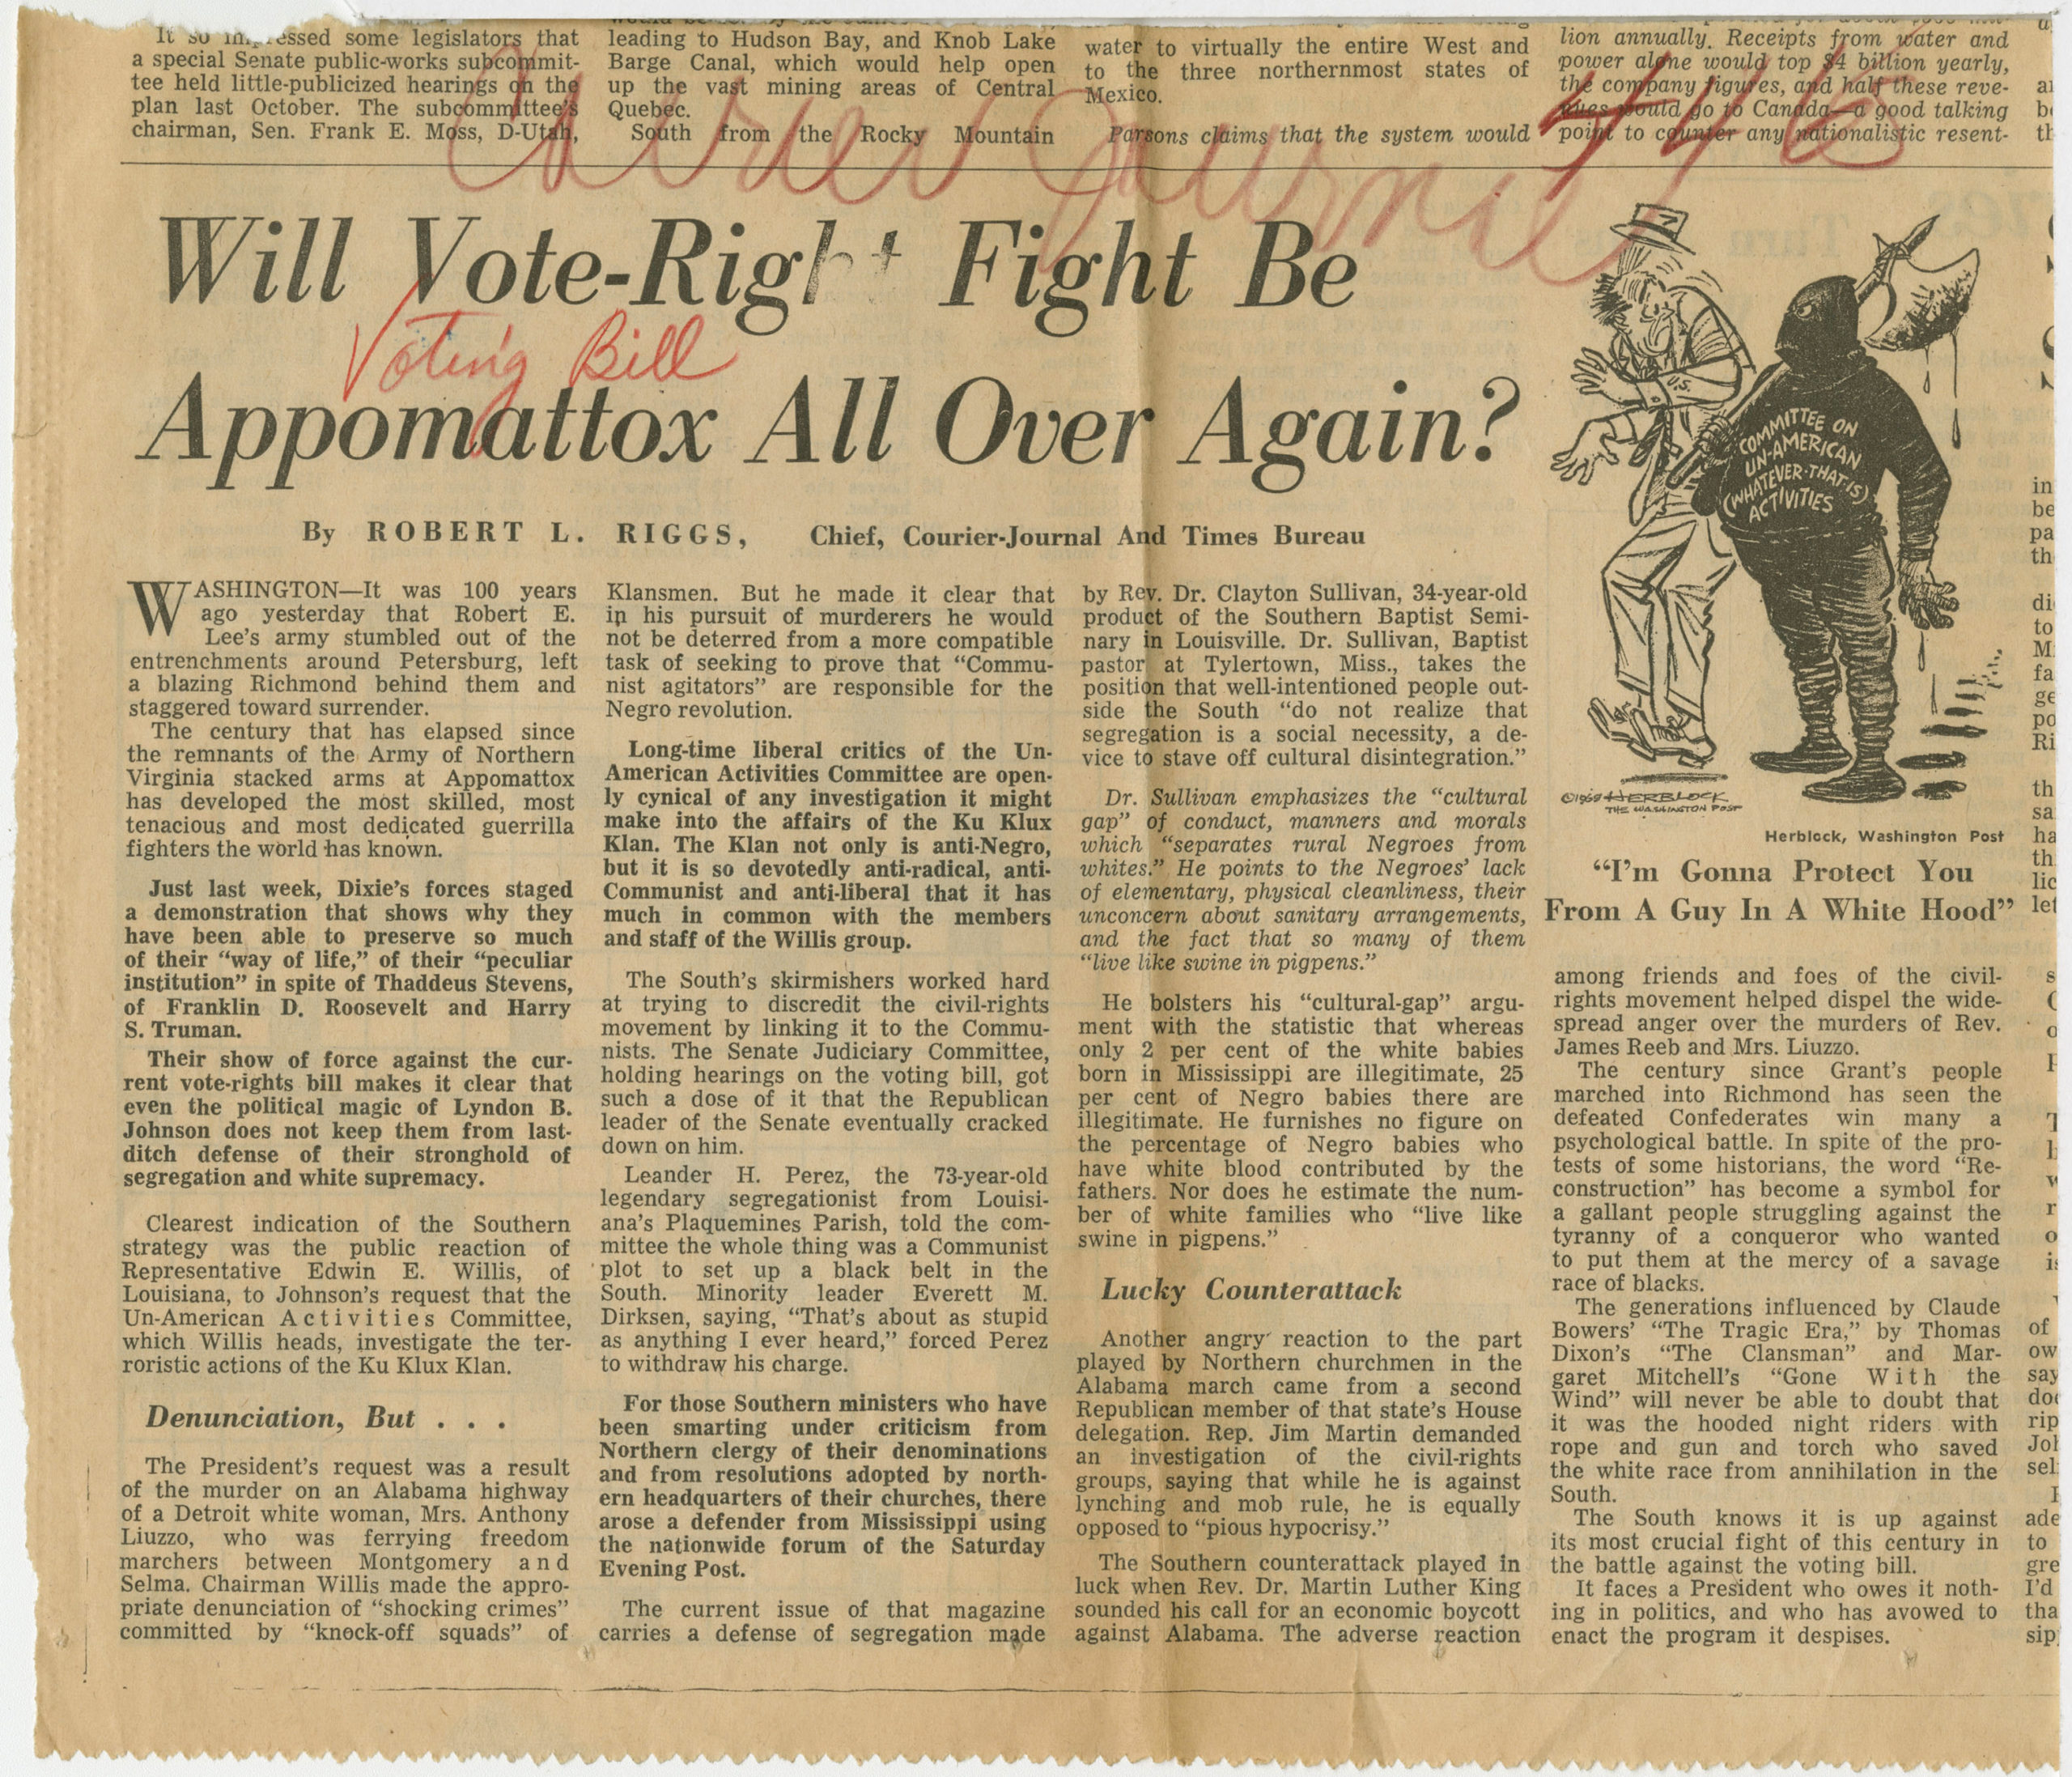 Will Vote-Right Fight Be Appomattox All Over Again, Robert L. Riggs, circa 1965, Johnson Publishing Company Clippings File Collection